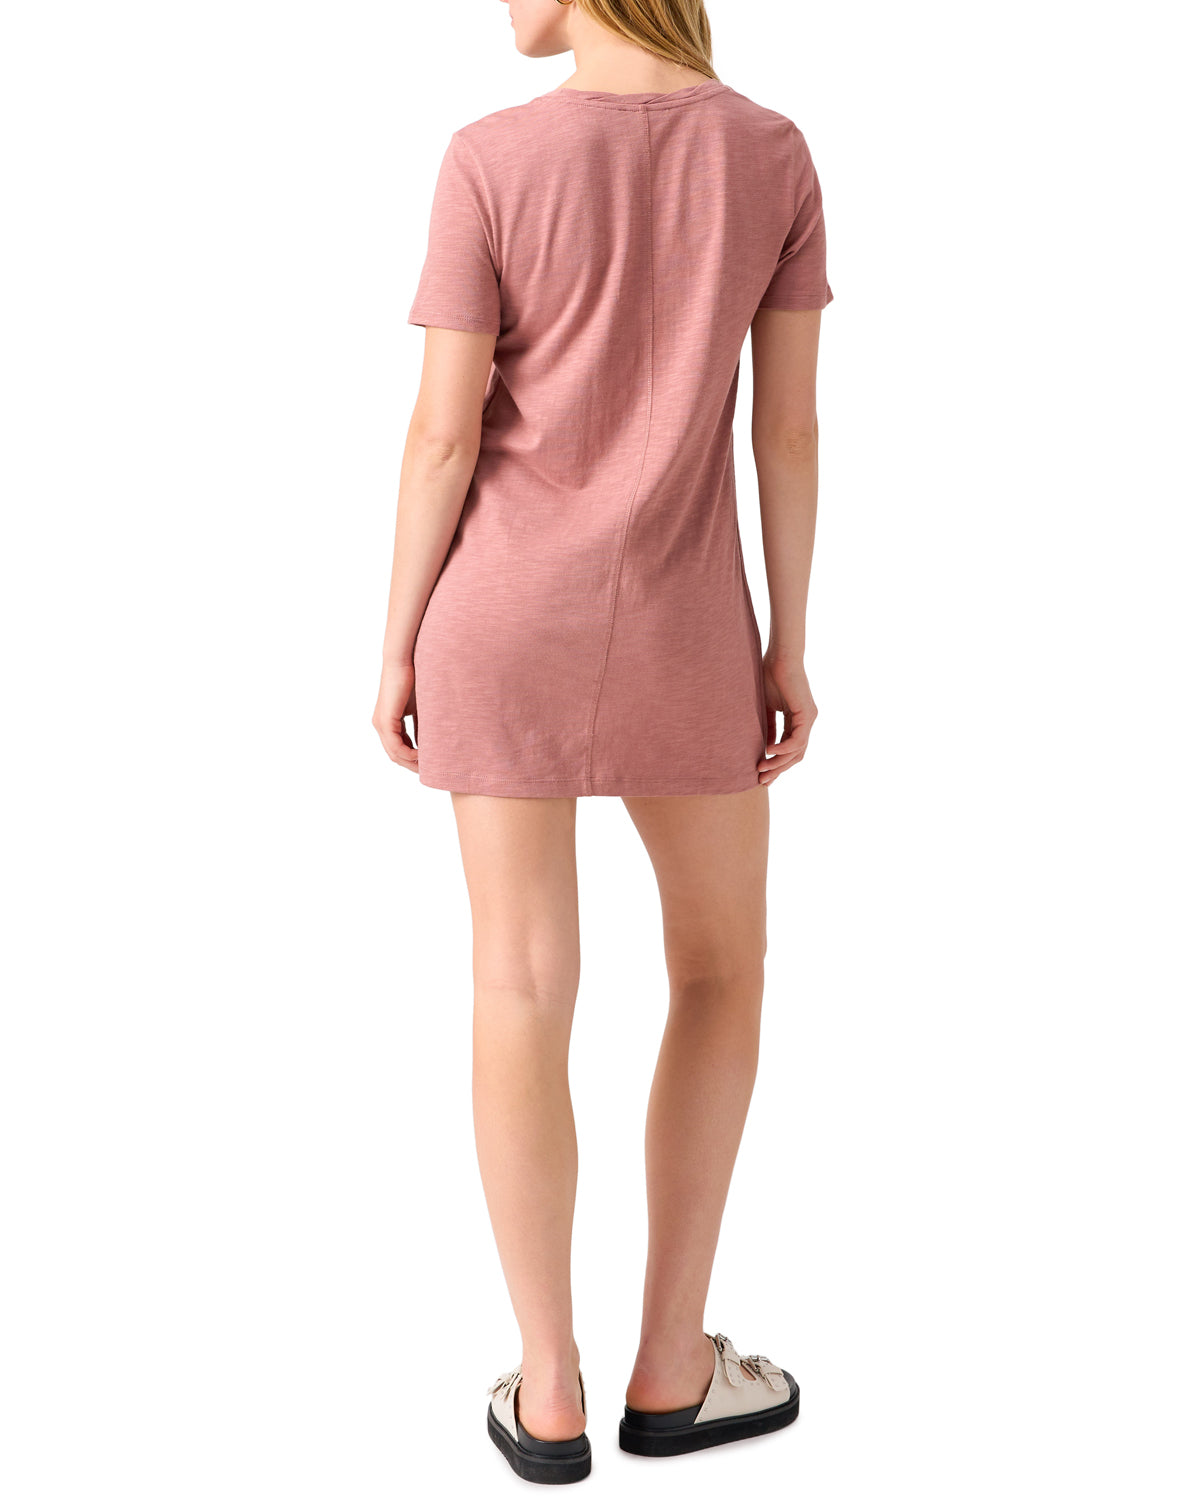 Ash Rose T-shirt Dress